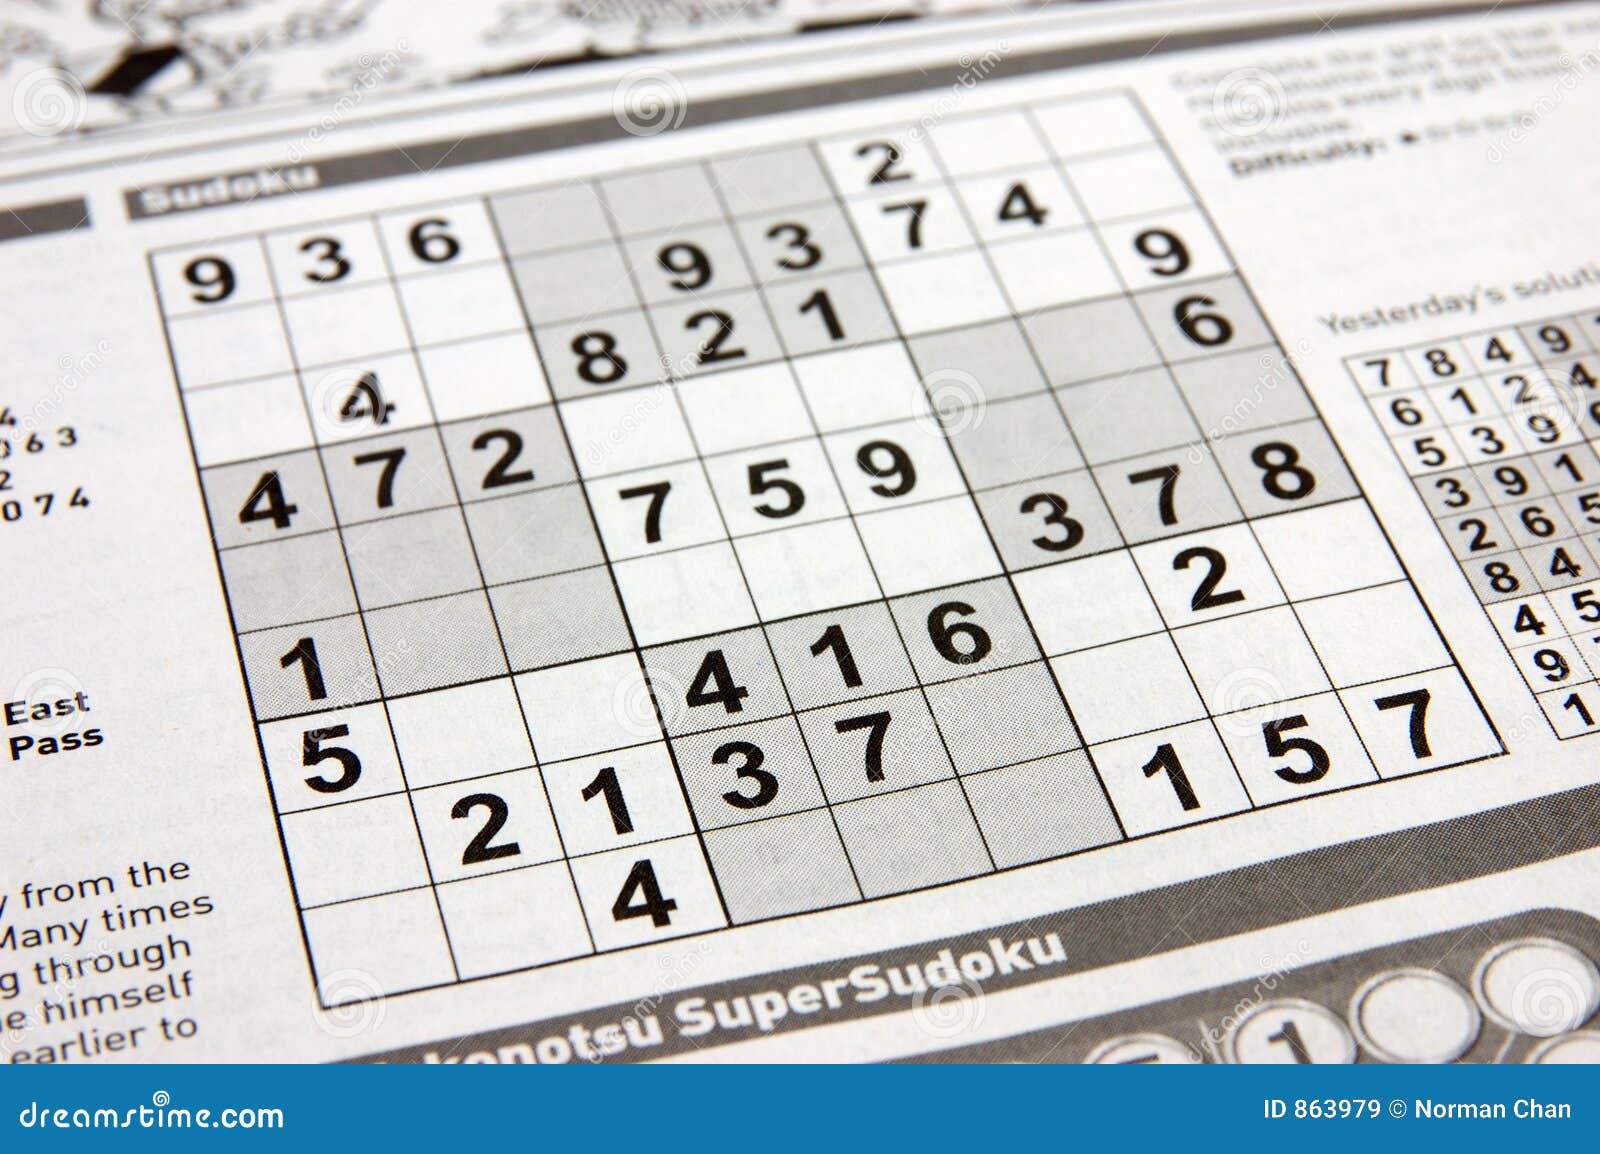 Rompecabezas Sudoku imagen archivo. Imagen de concepto -